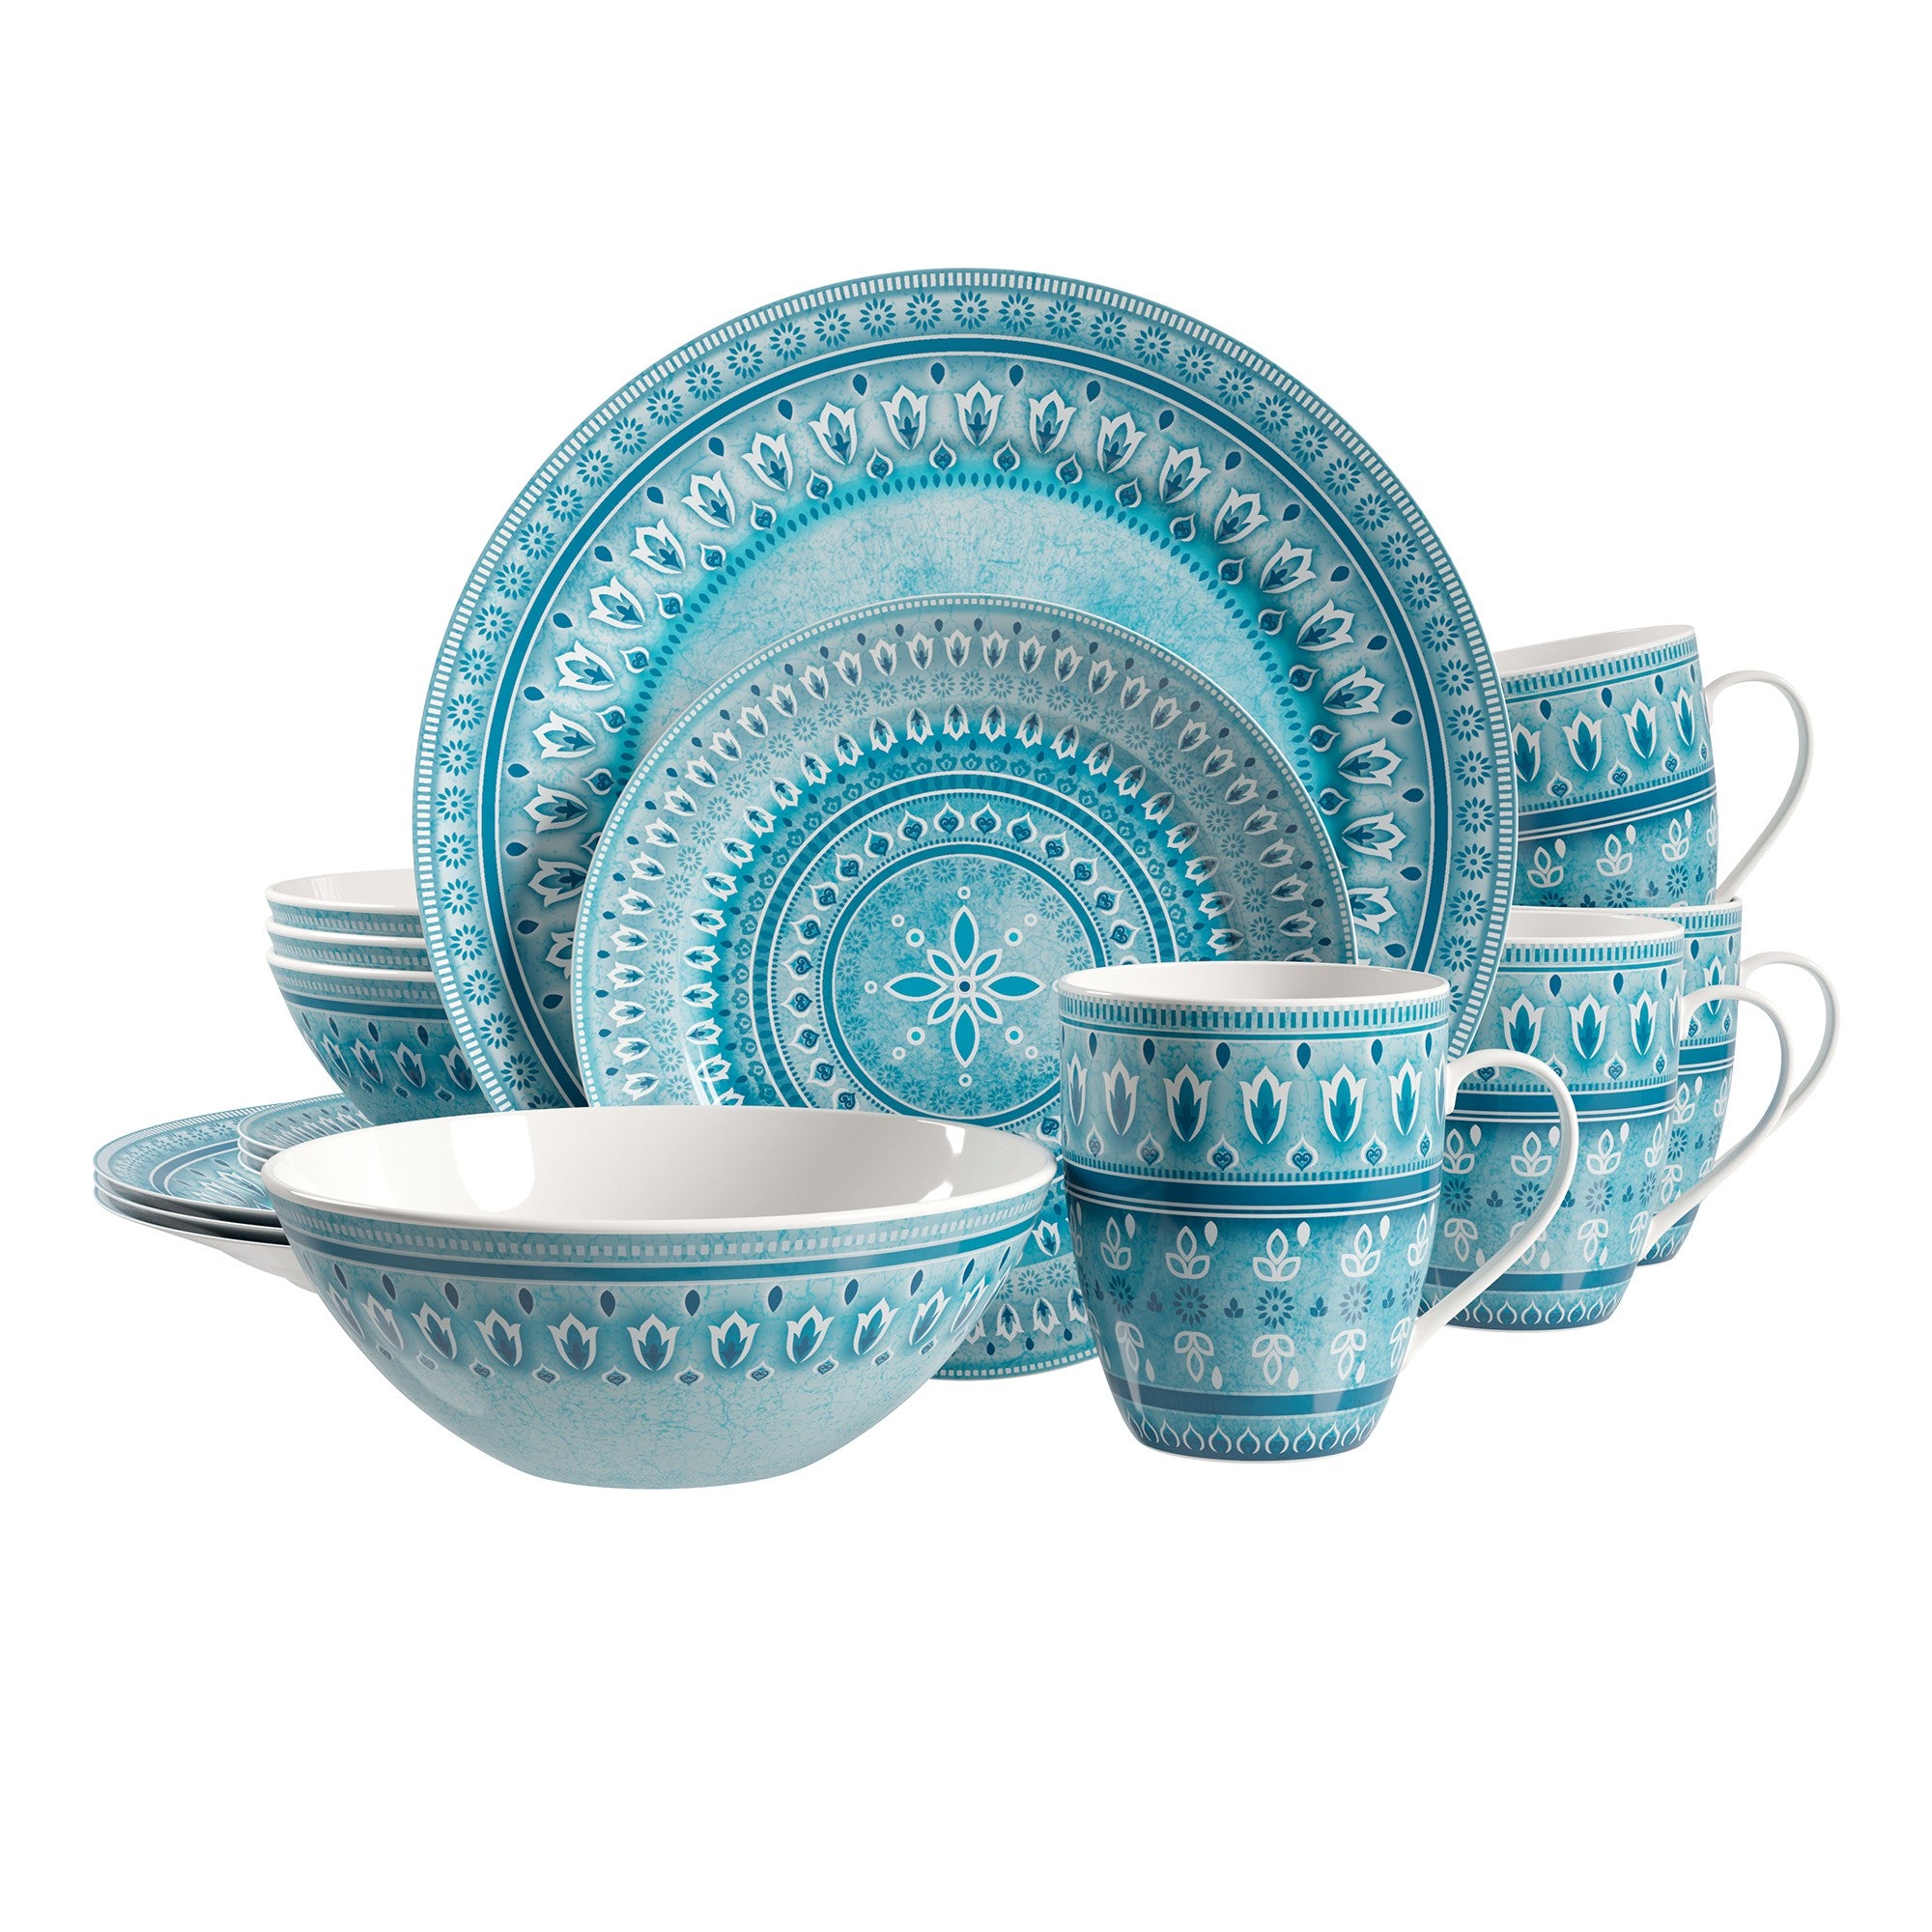 title:Safdie & Co. Luxury Premium Porcelain Dinnerset 16 Piece Set Ana;color:Multi